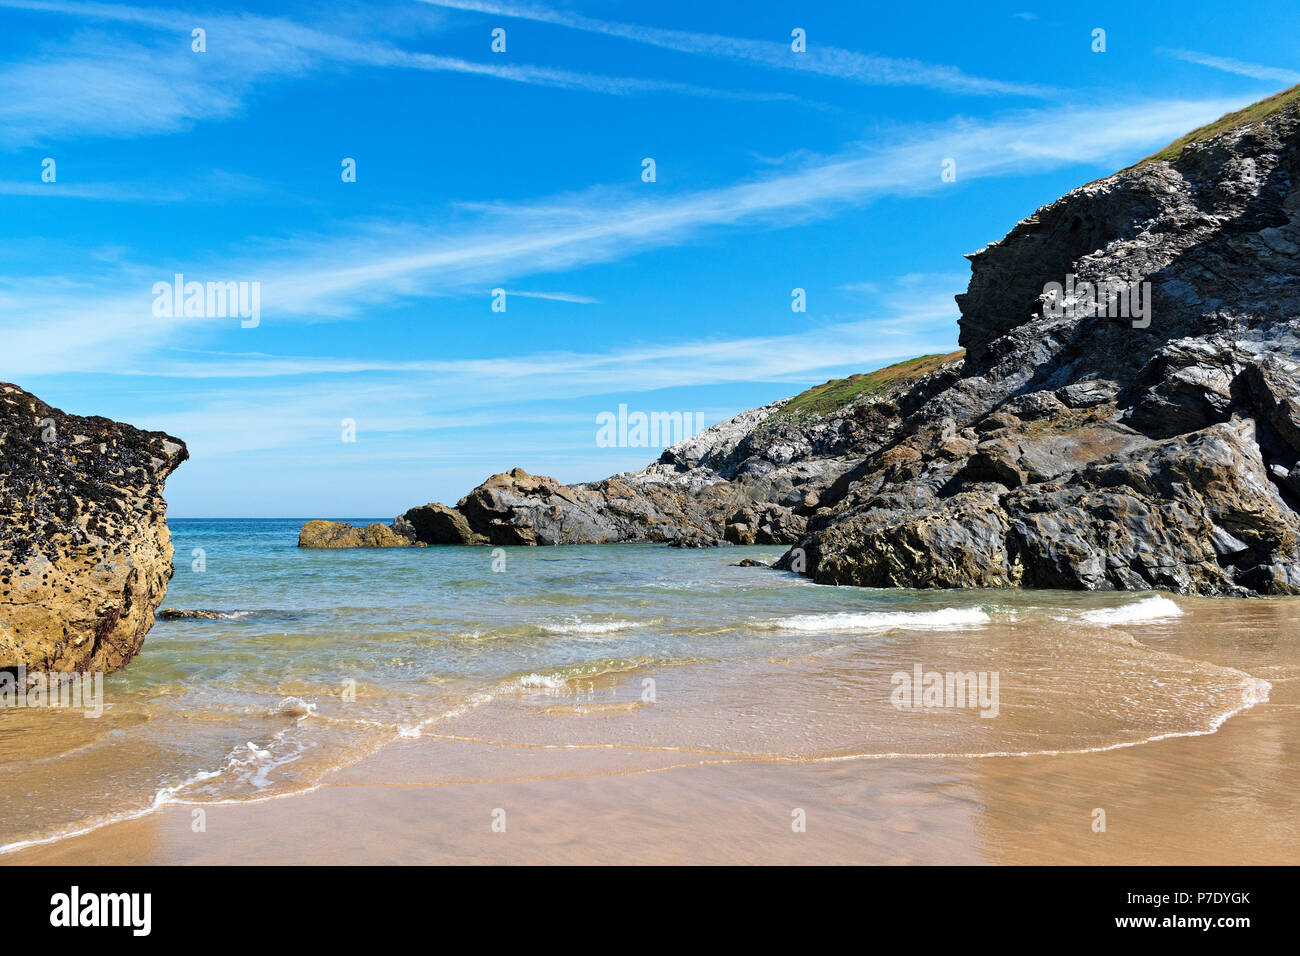 Blague de porth, Polly Joke, beach, Cornwall, Angleterre, Grande-Bretagne, Royaume-Uni Banque D'Images